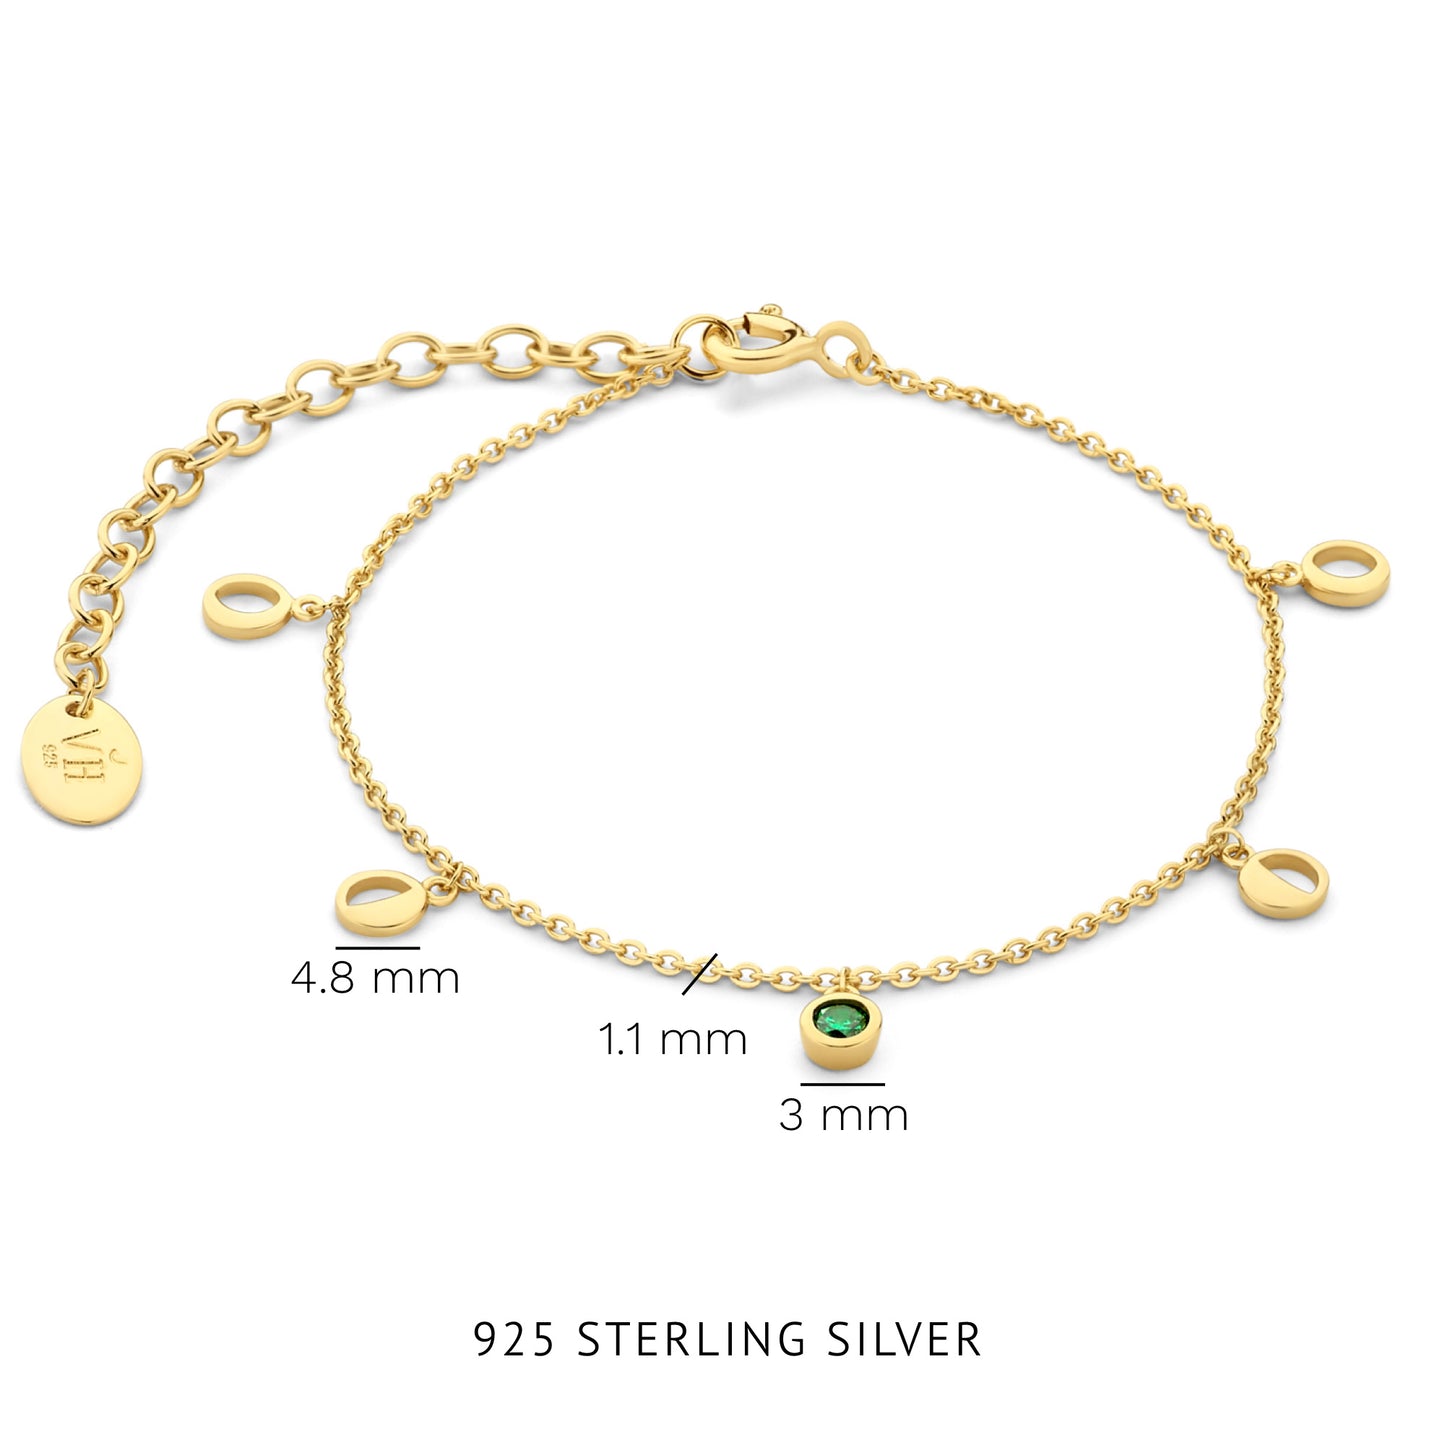 Violet's Gift 925 sterling silver gold plated bracelet and ear studs gift set